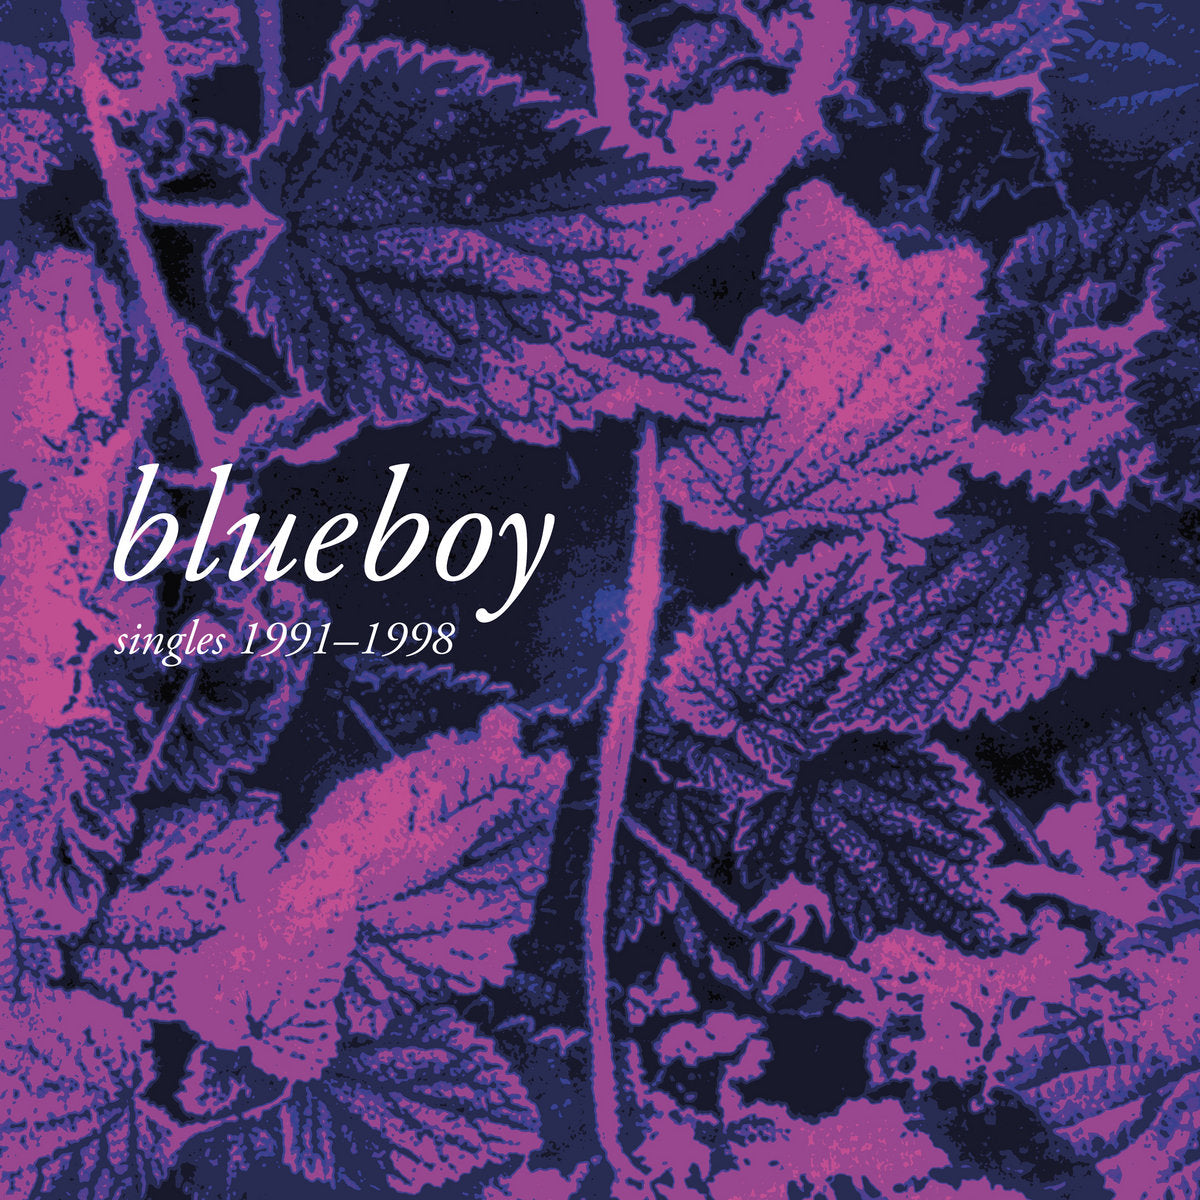 Blueboy – Singles 1991-1998